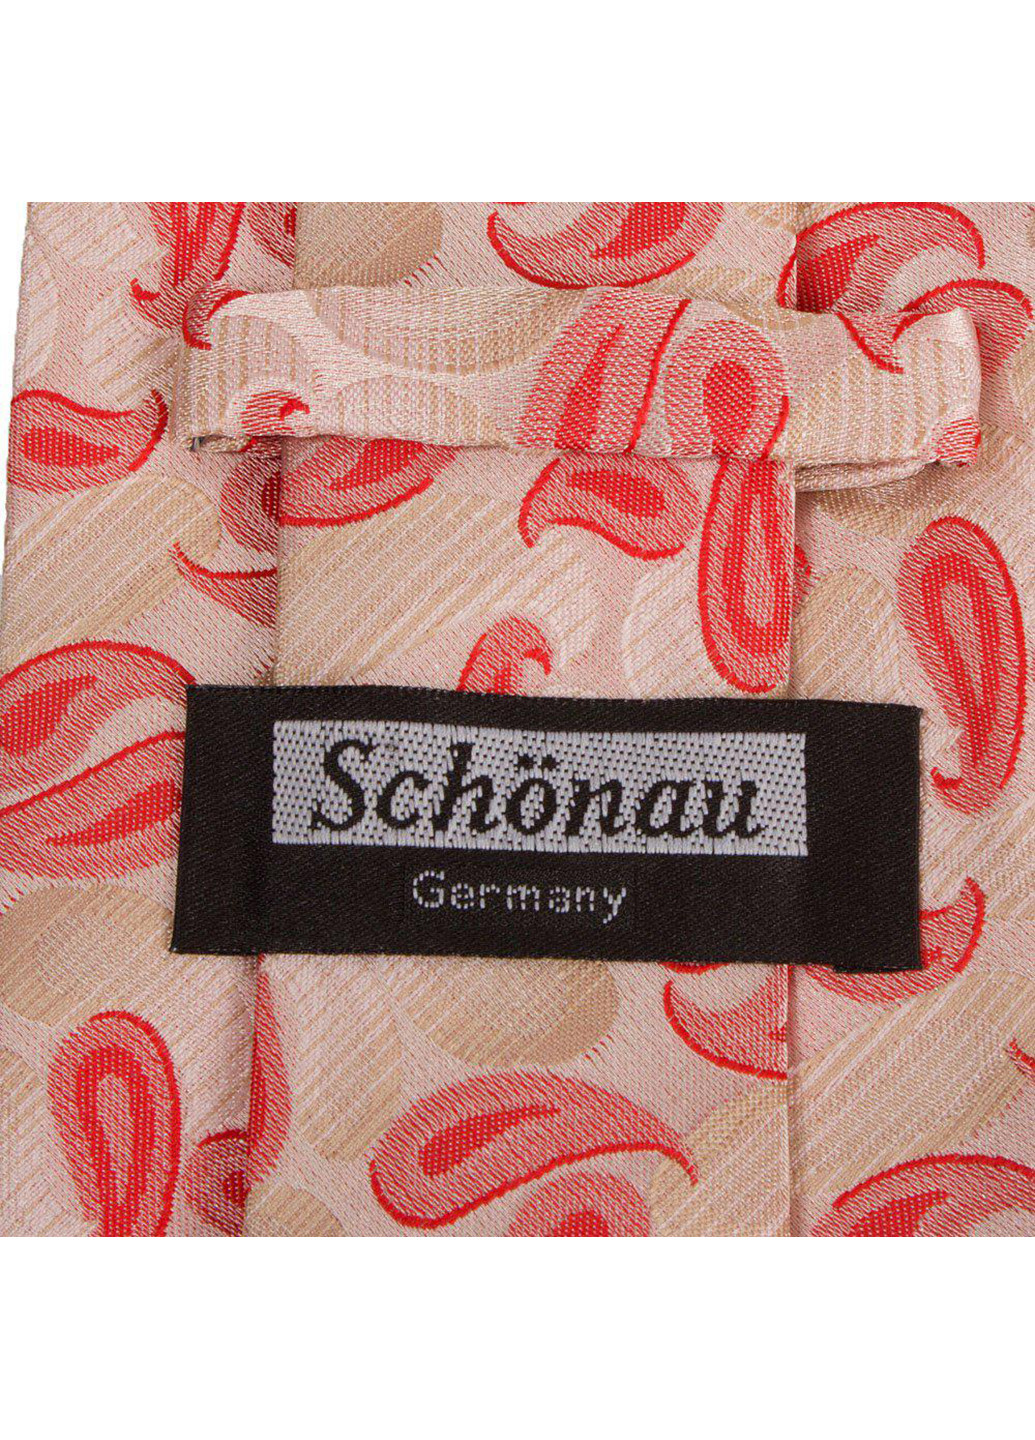 Мужской галстук 149 см Schonau & Houcken (252128692)